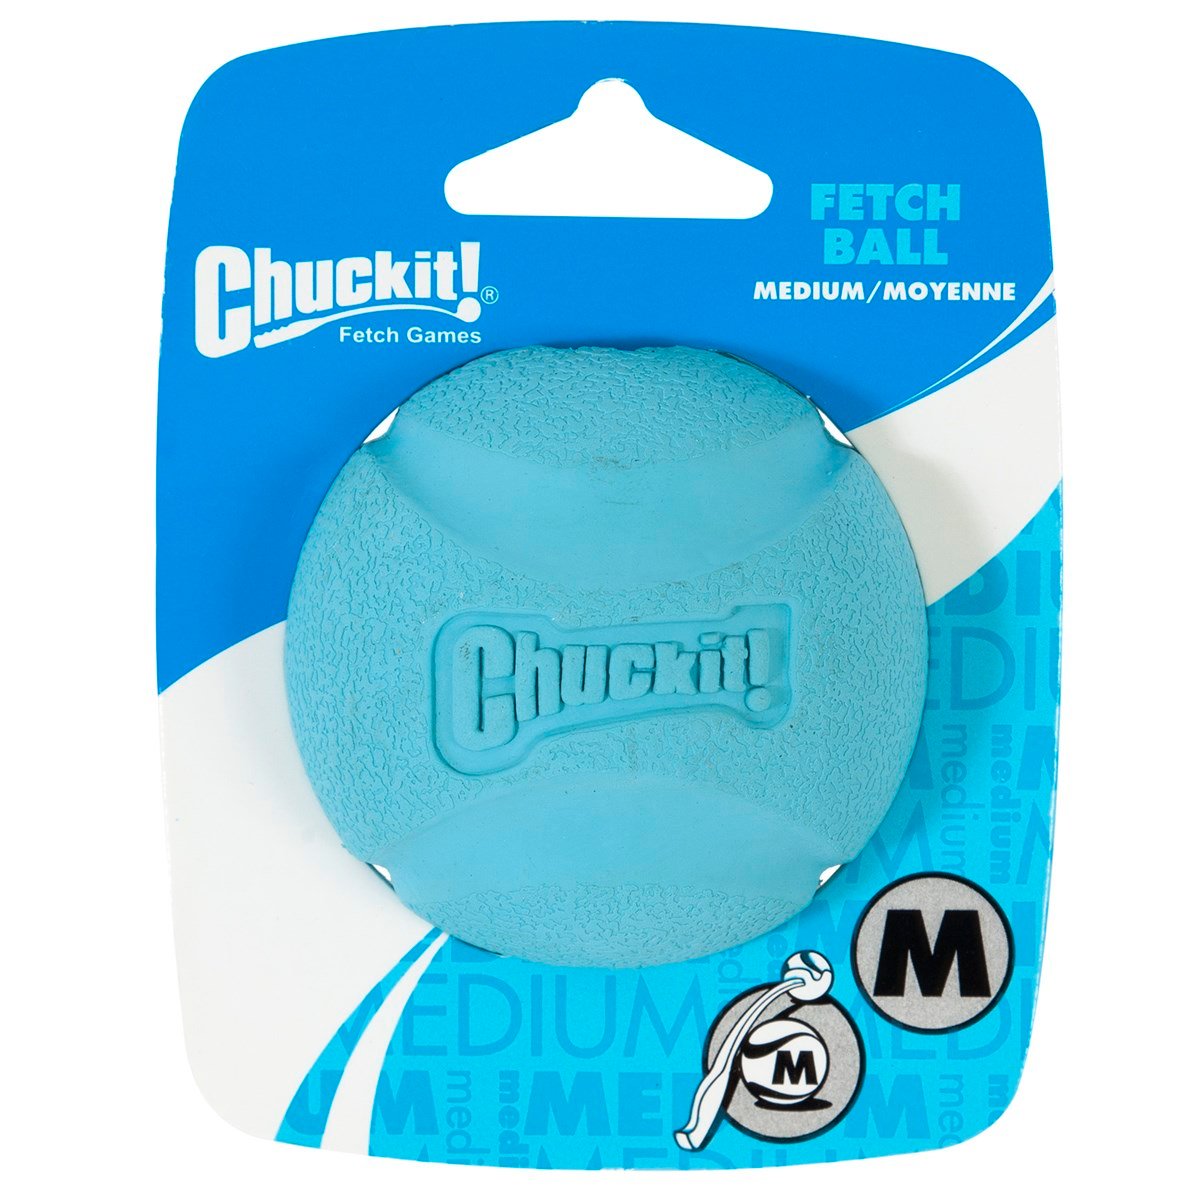 Chuckit! Fetch Ball Köpek Oyun Topu Orta Boy 6,5 Cm